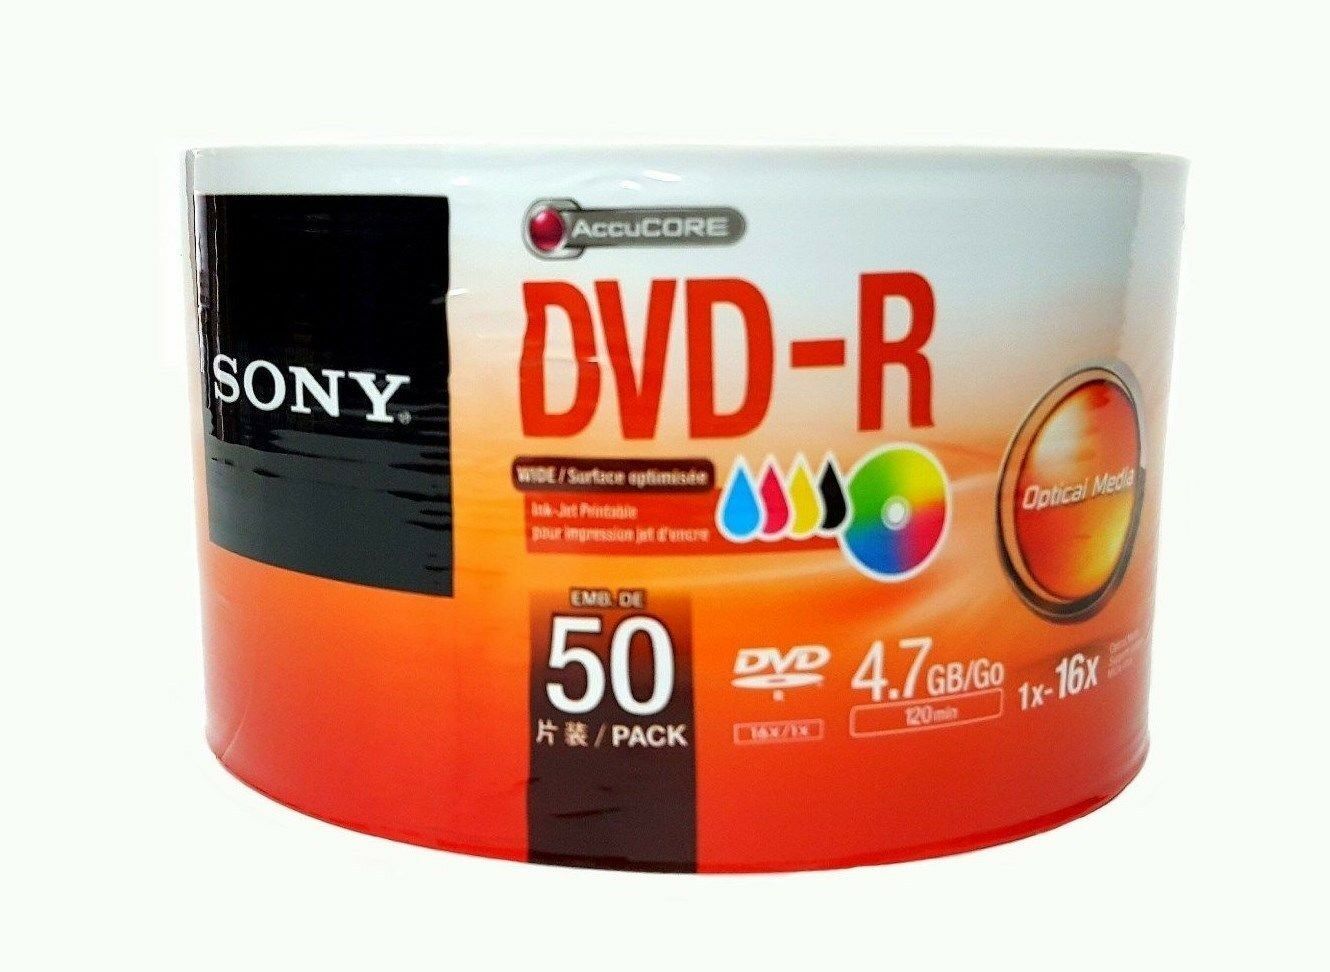 SONY DVD-R 16x 4.7GB White Inkjet Printable Media Discs 50 Pack.